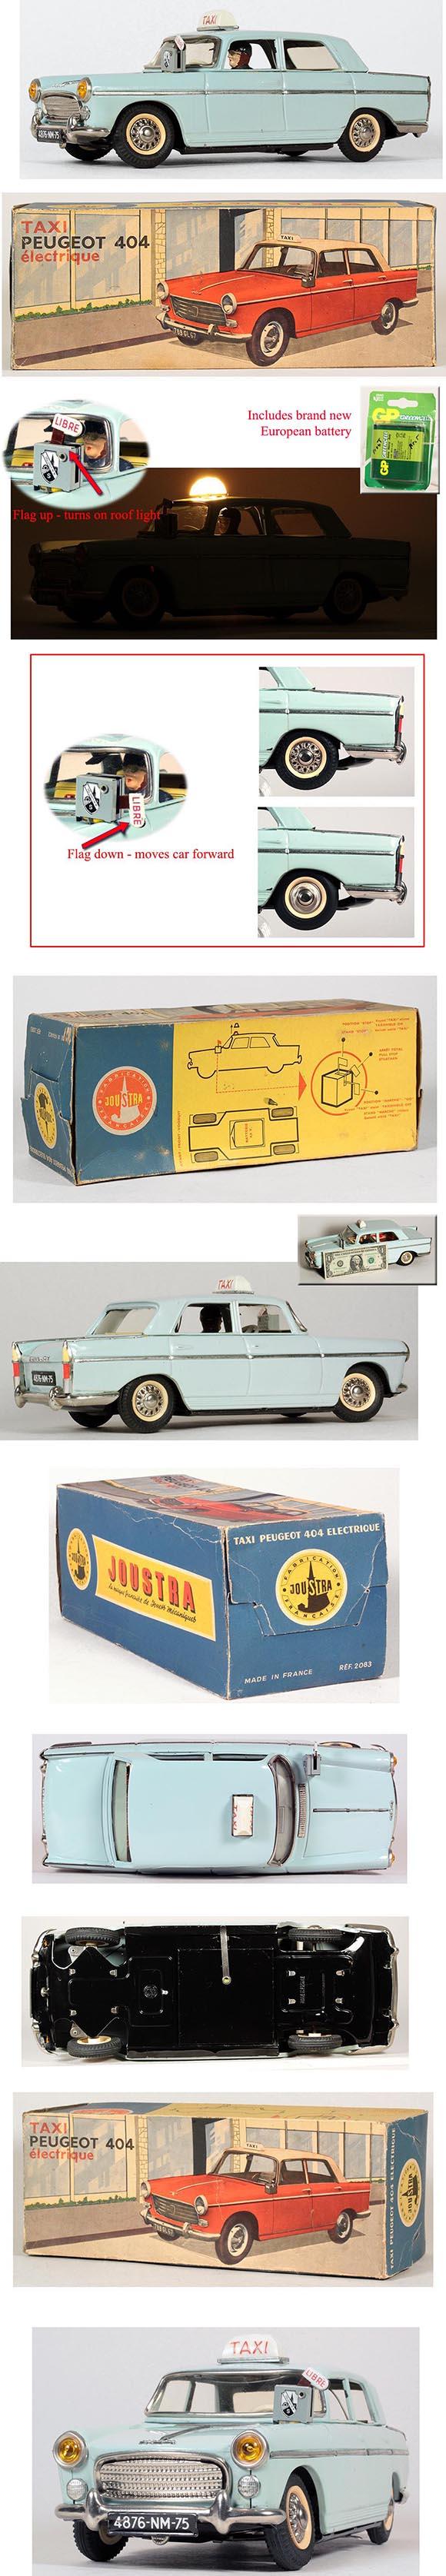 c.1960 Joustra, Battery Operated Peugeot 404 Taxi Sedan in Original Box